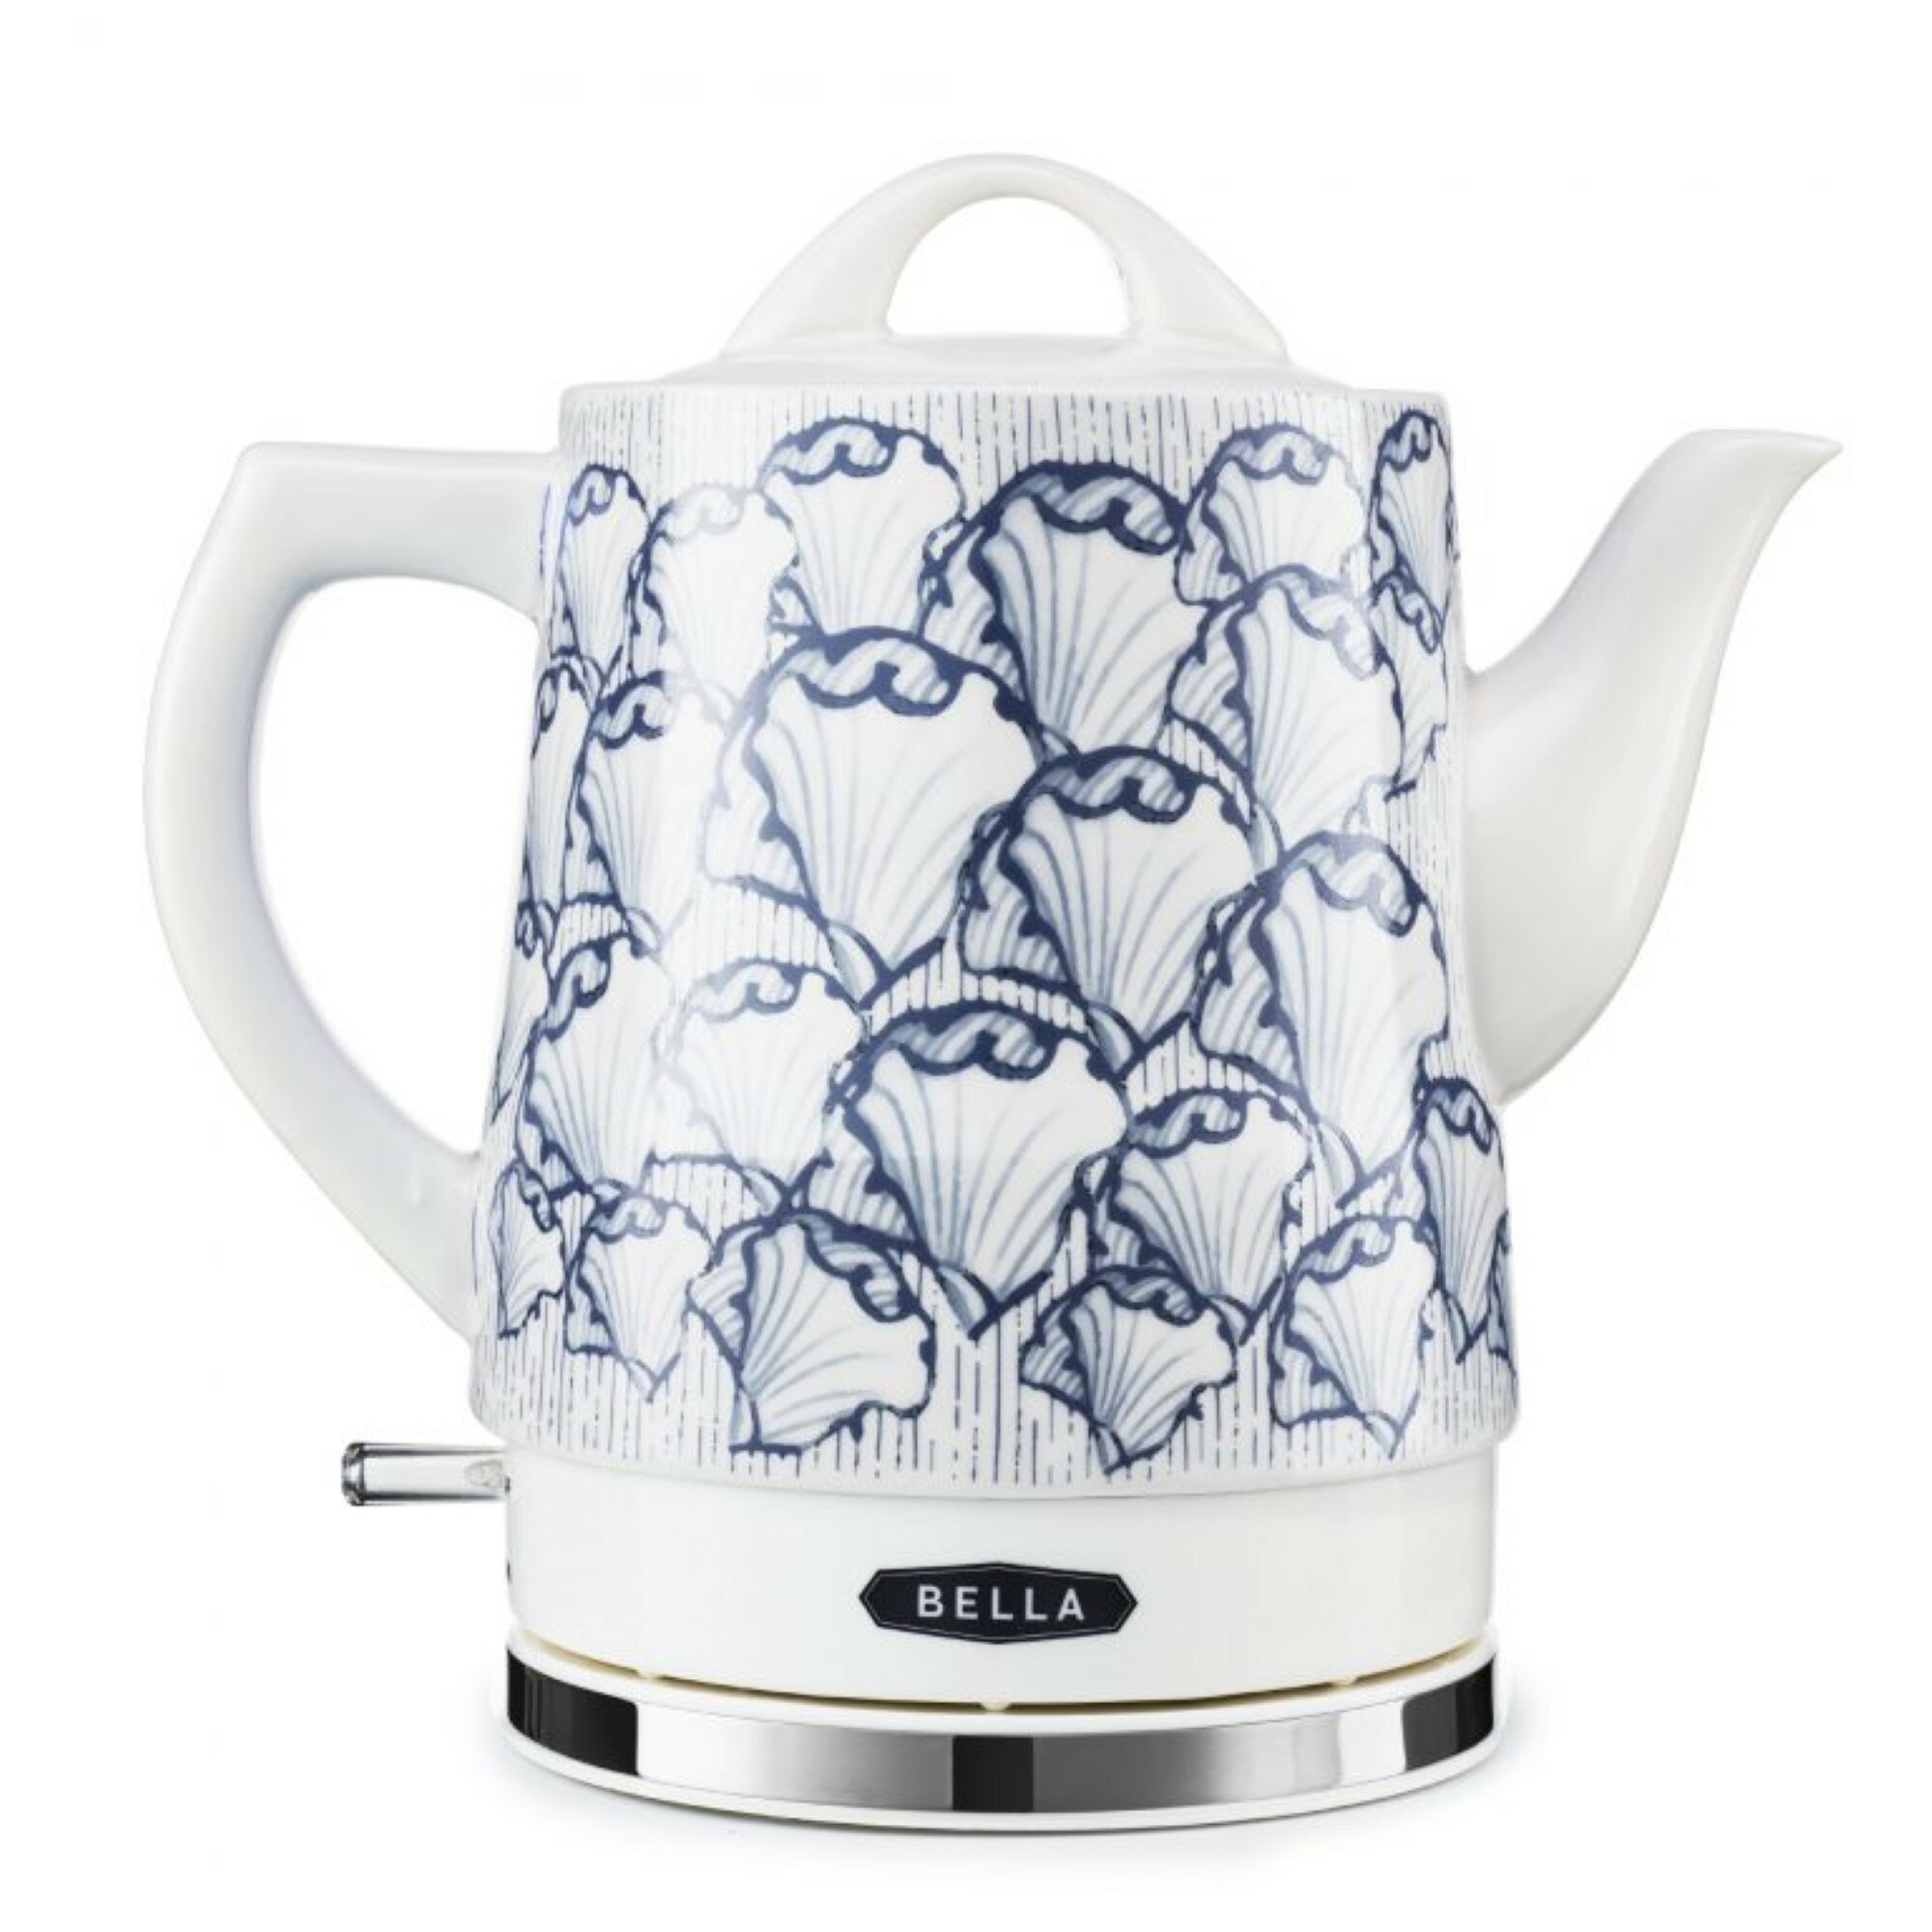 bella ceramic teapot